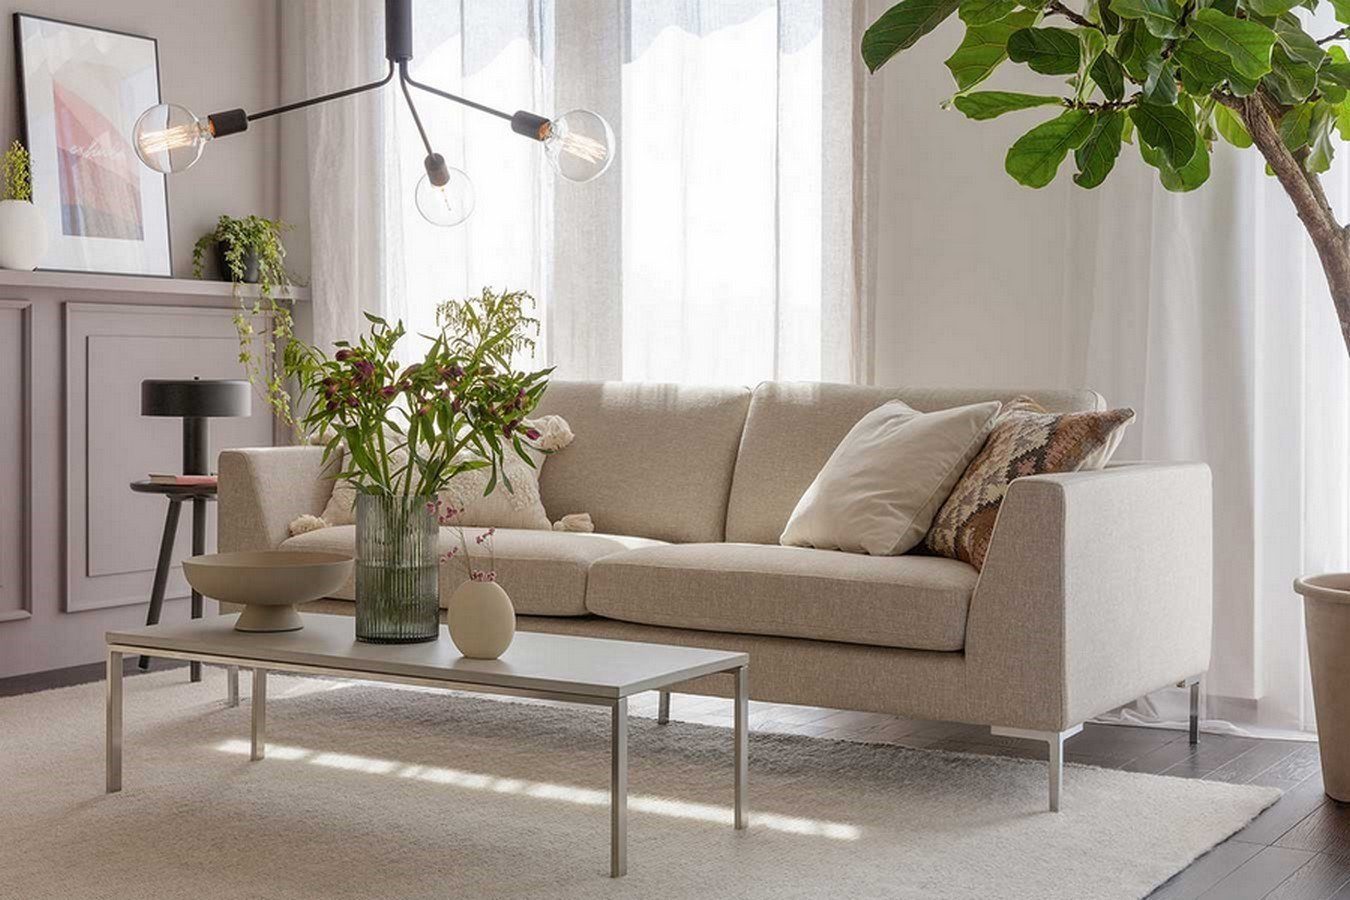 daslagerhaus 2 living Oslo Premium Sitzer Ledersofa braun Big-Sofa